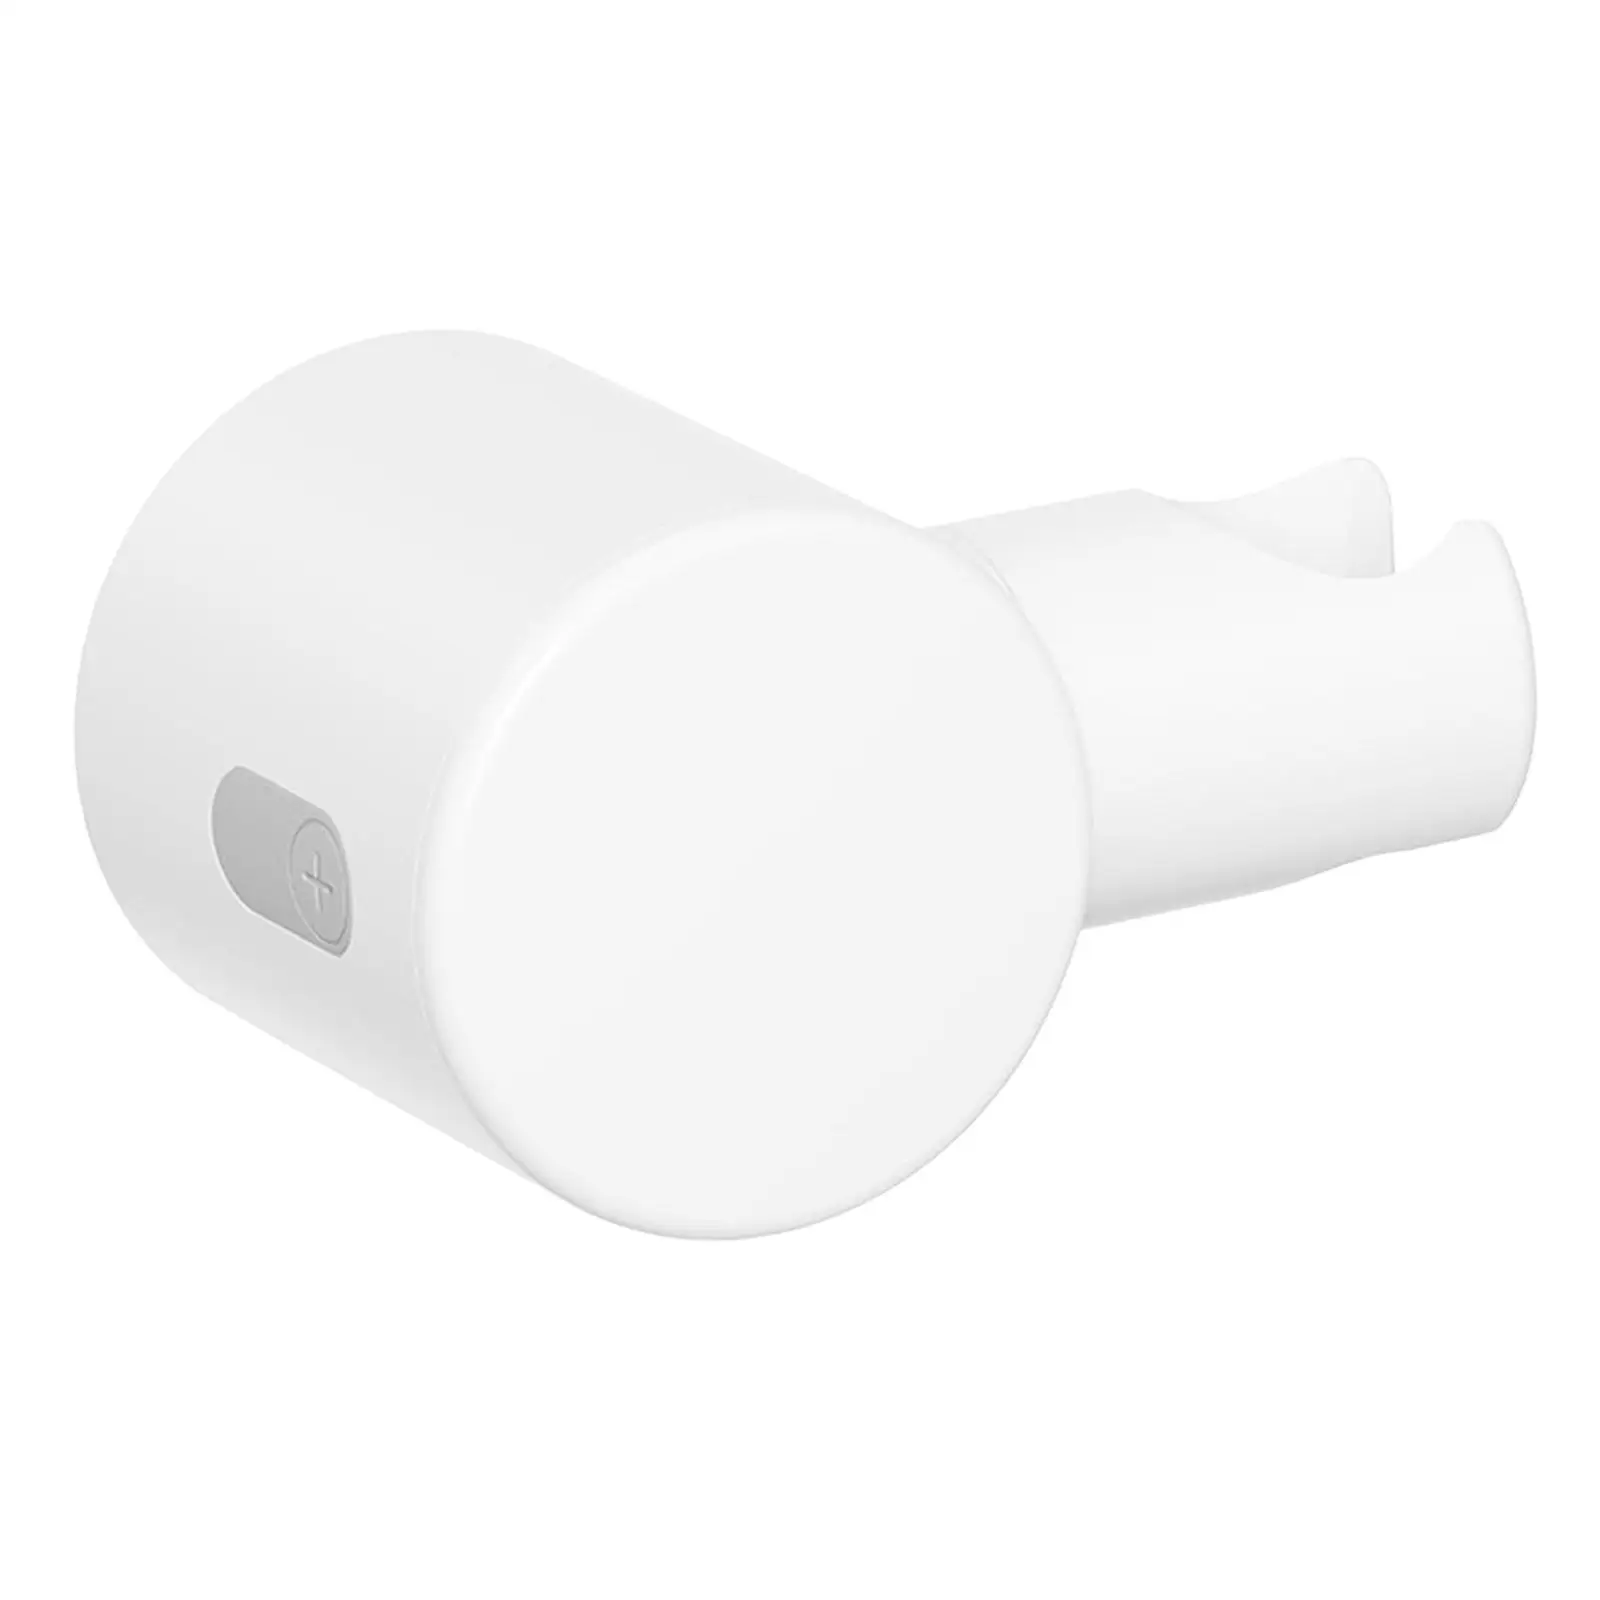 Plastic Handheld Shower Holder Shower Fixing Bracket Lightweight Easy Install Adjustable No Drilling Rack Bathroom Accessories